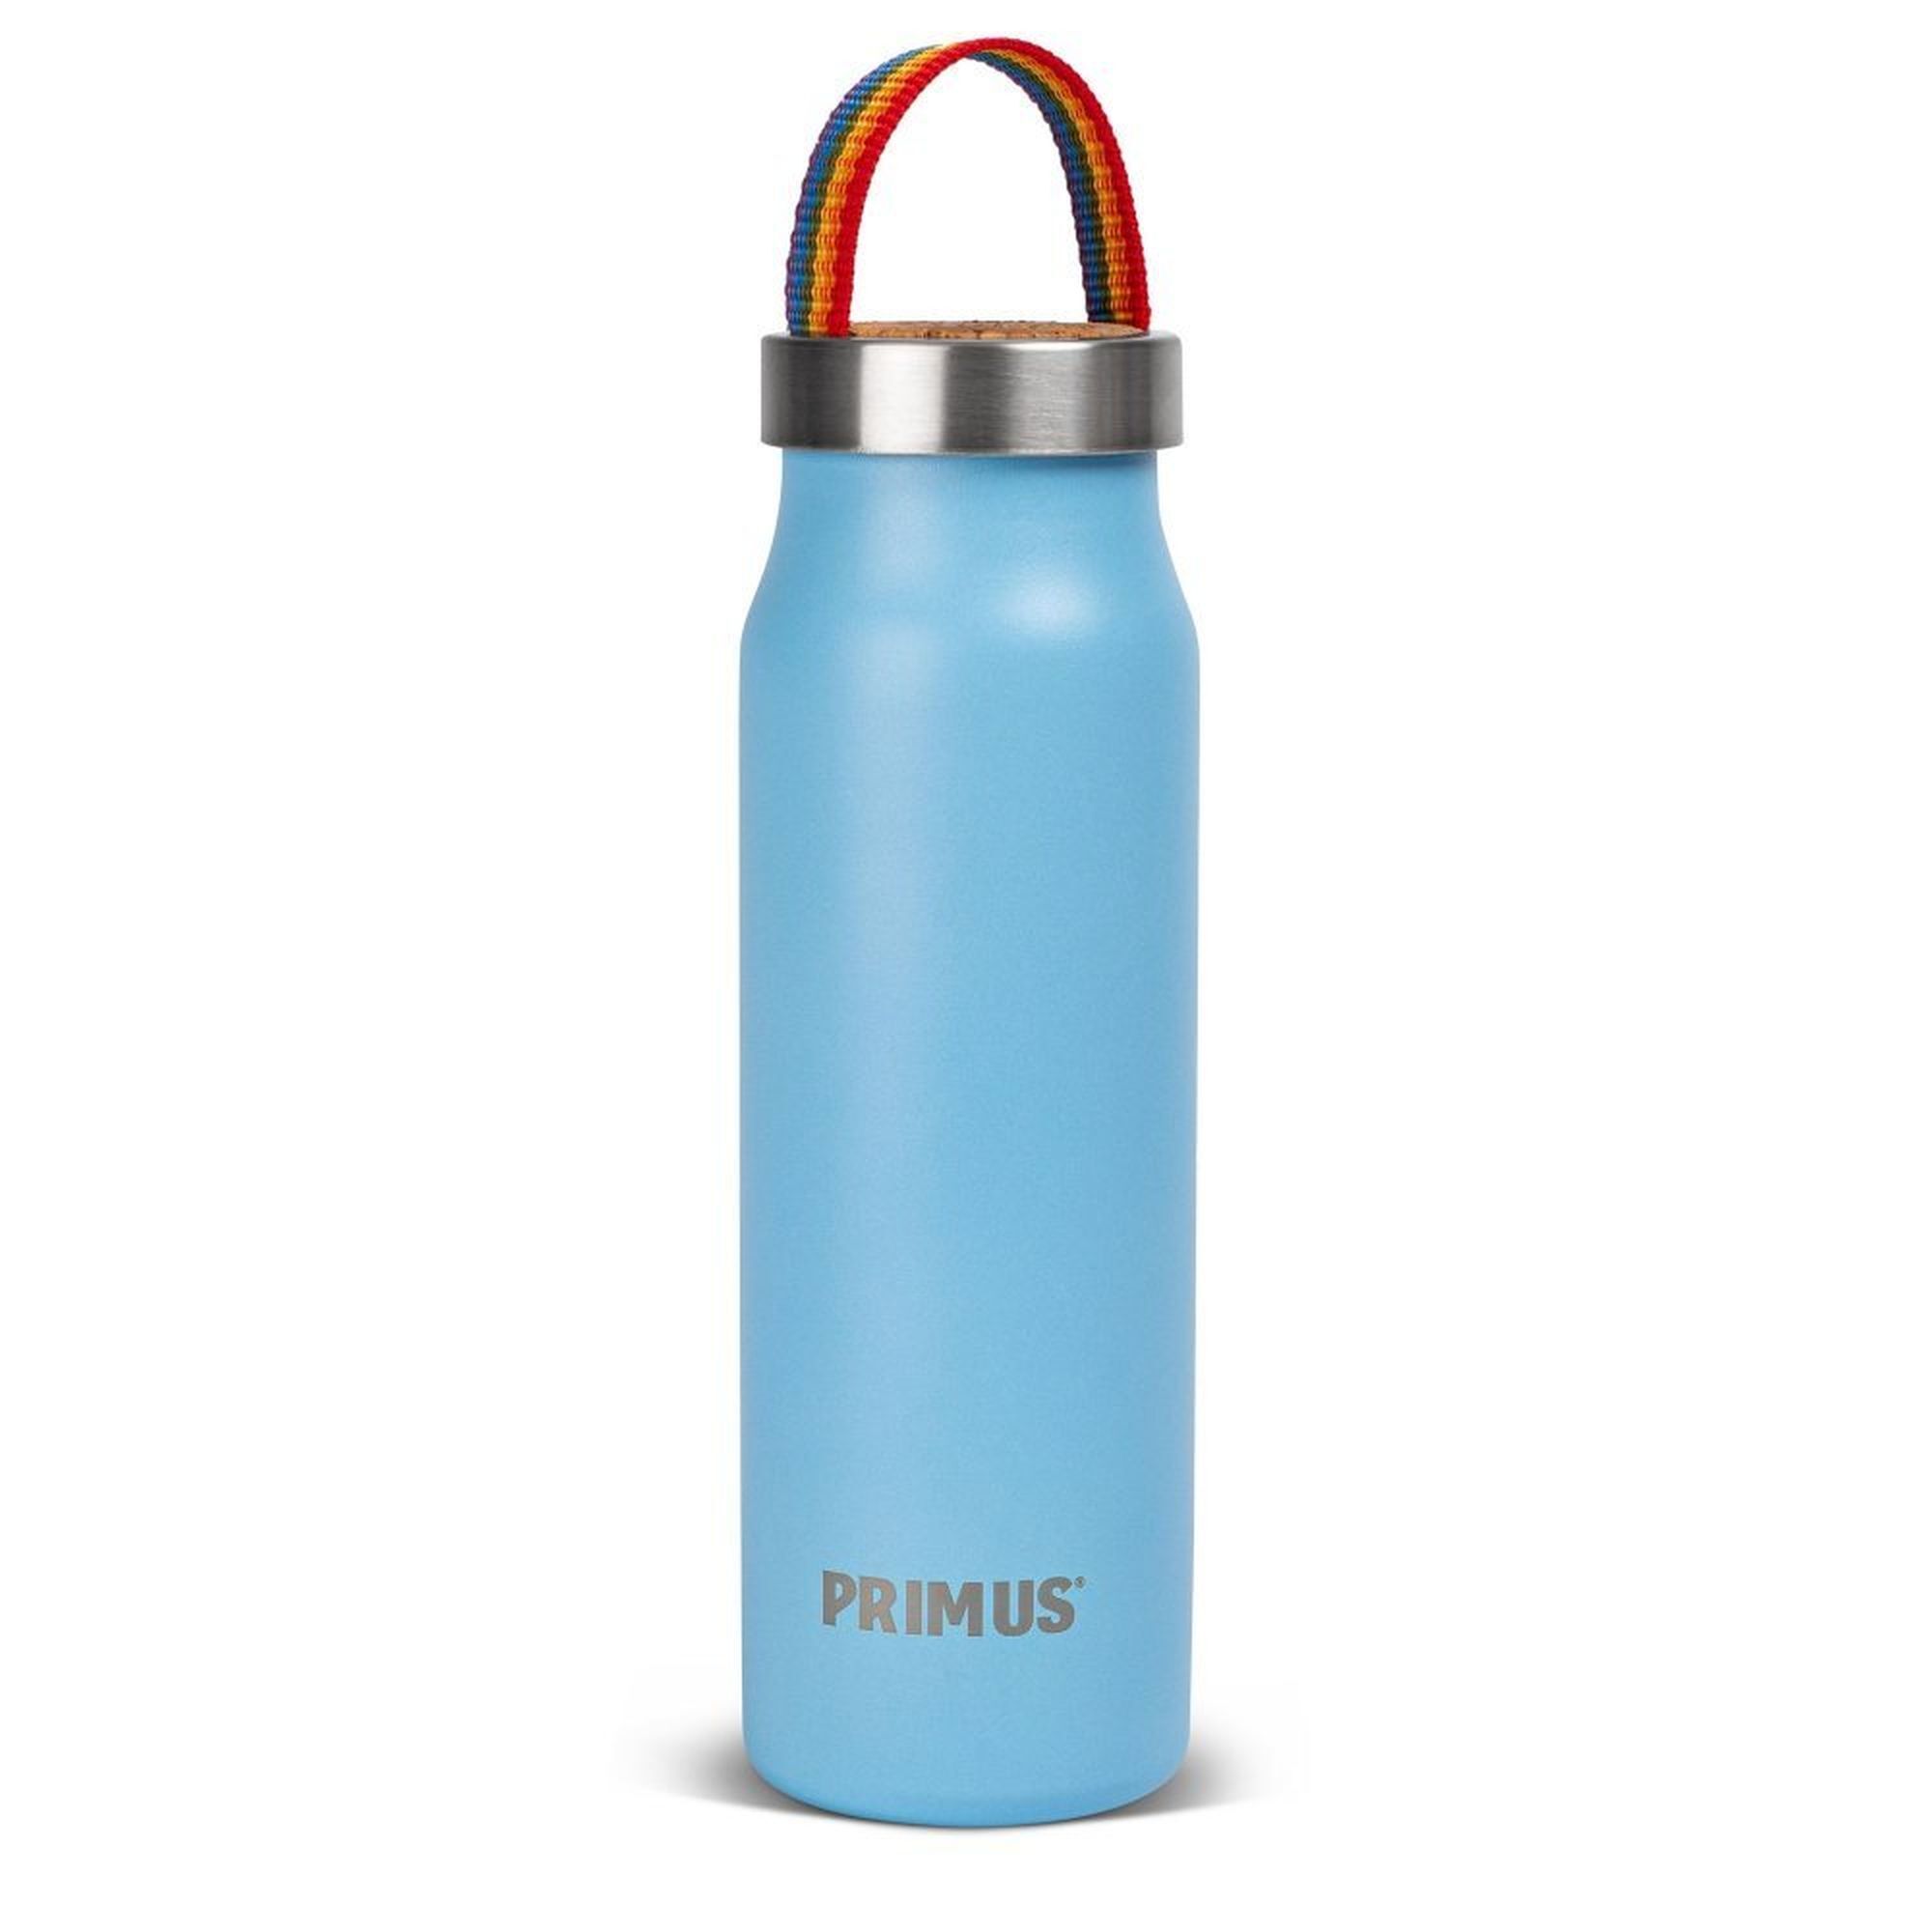 Primus Klunken Vacuum Bottle 0.5L - Isolerad vattenflaska